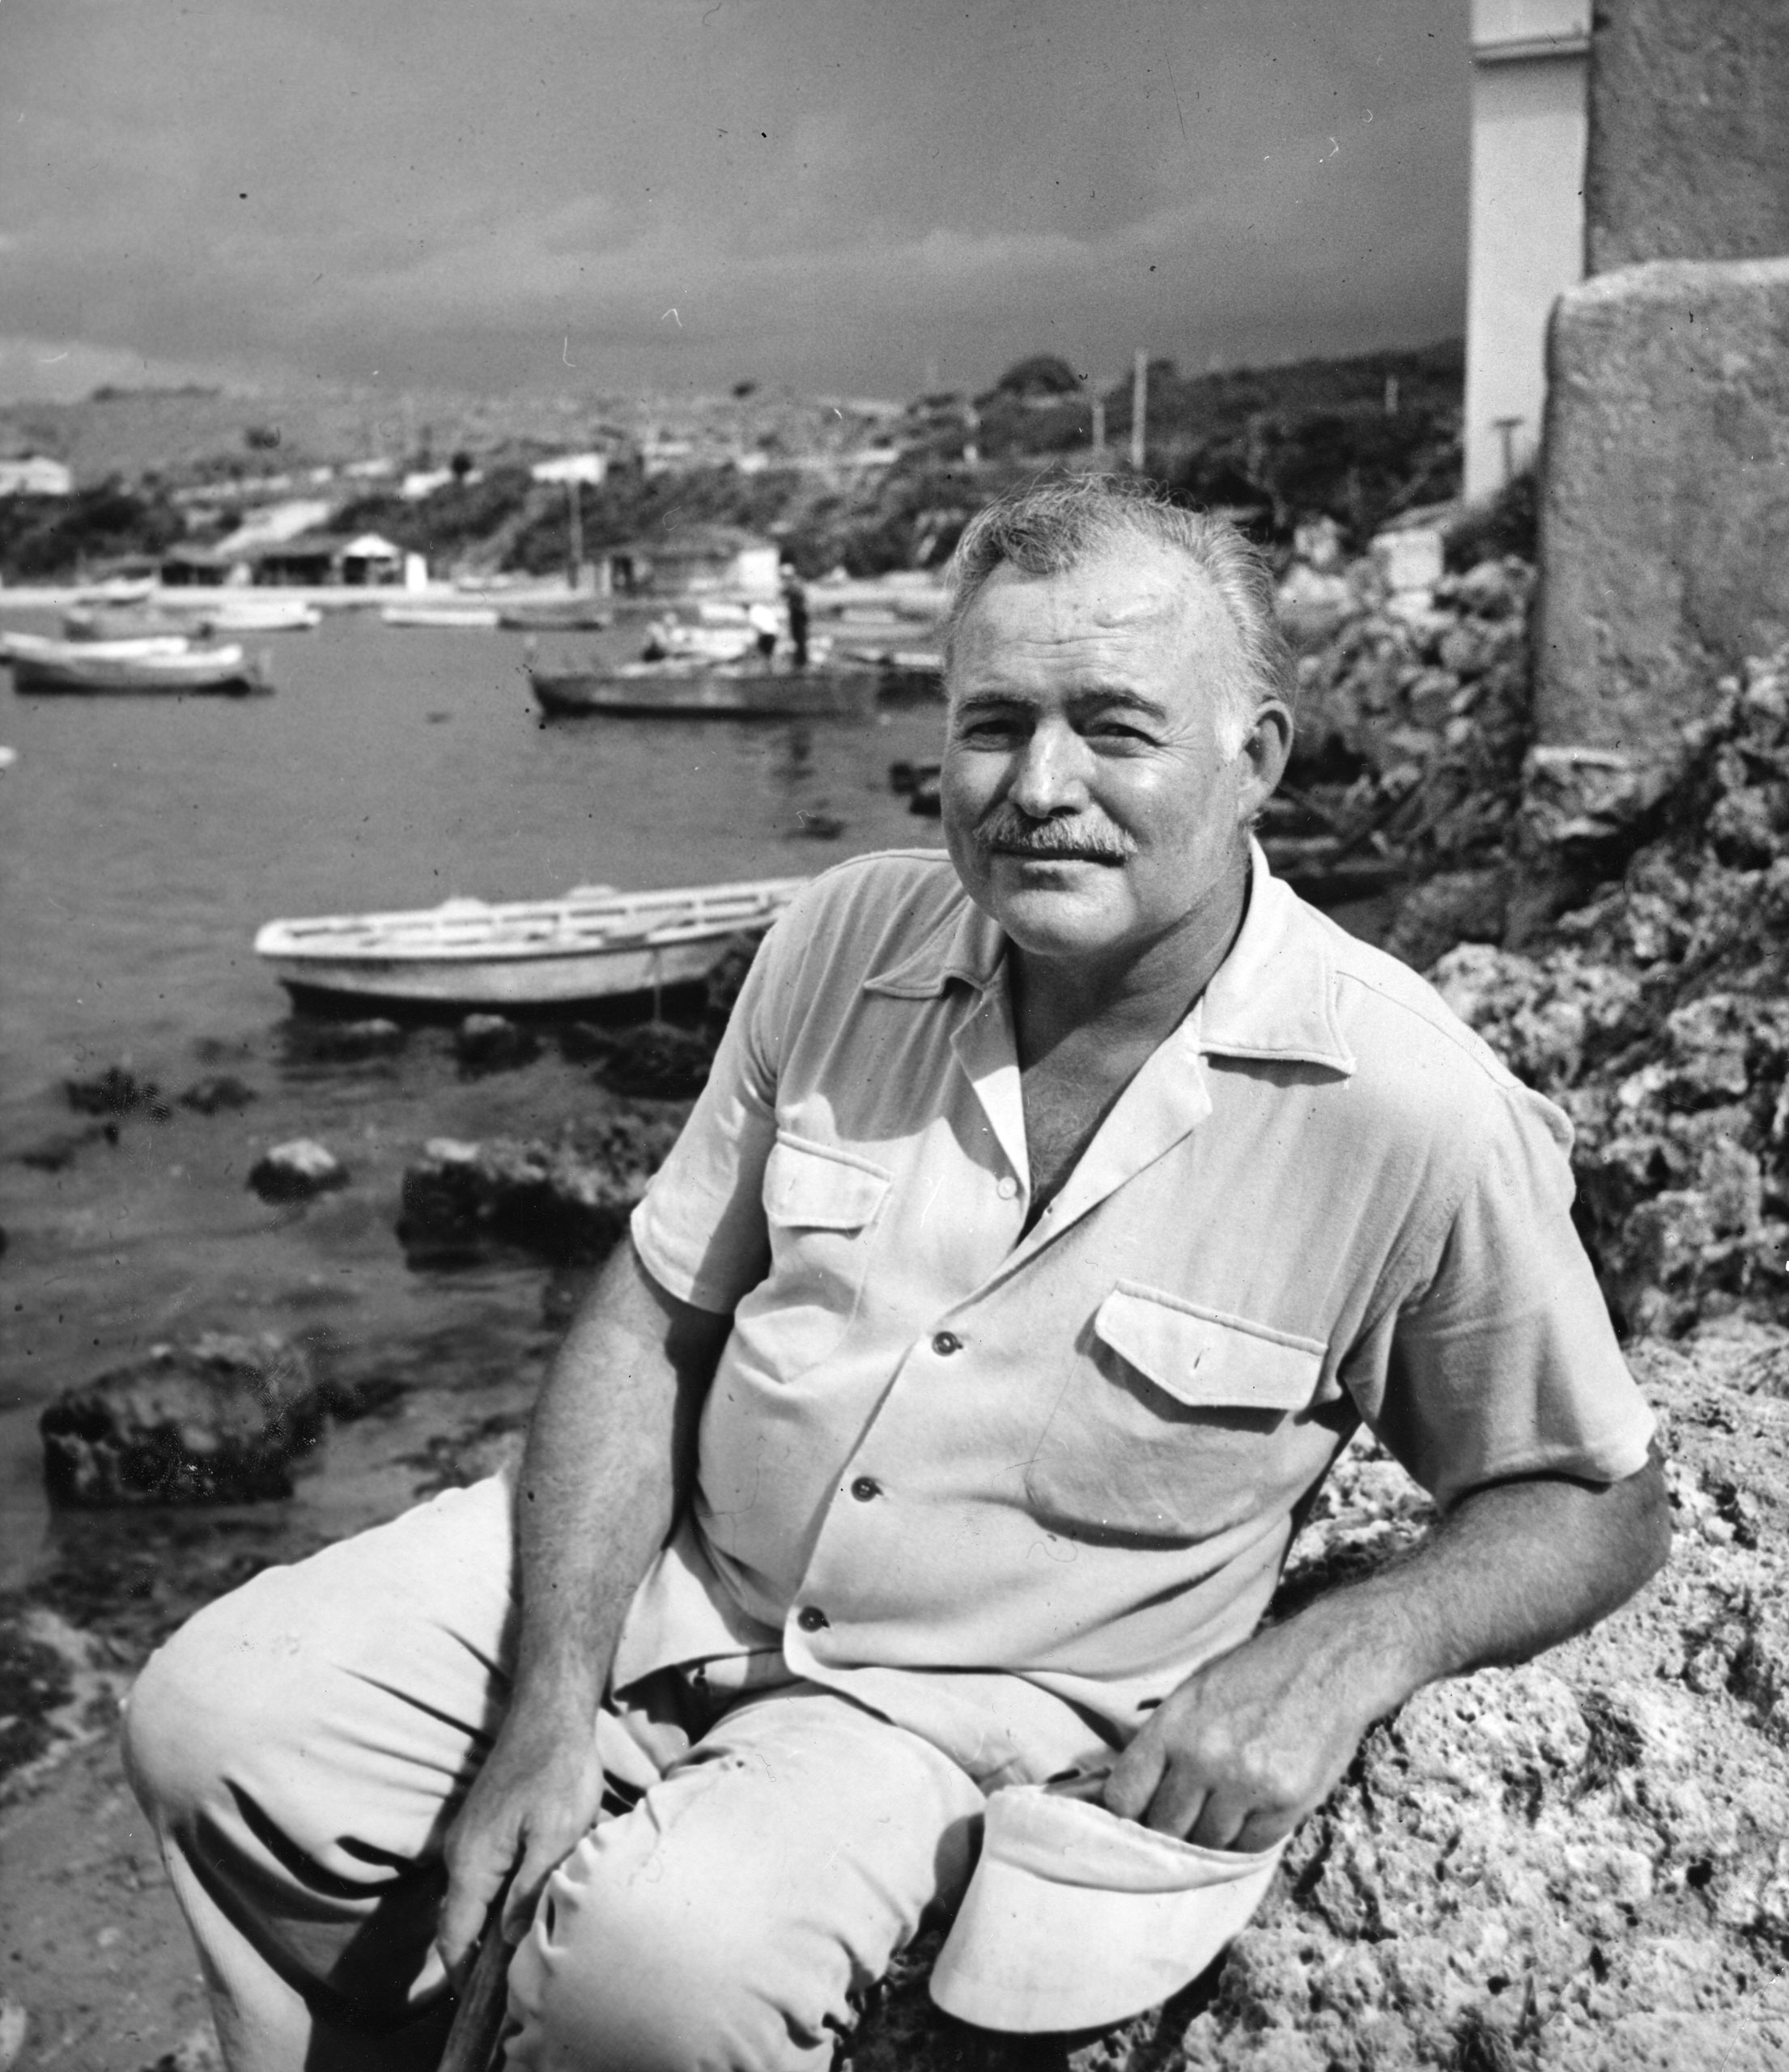 Ernest Hemingway in Cuba, August 1952.